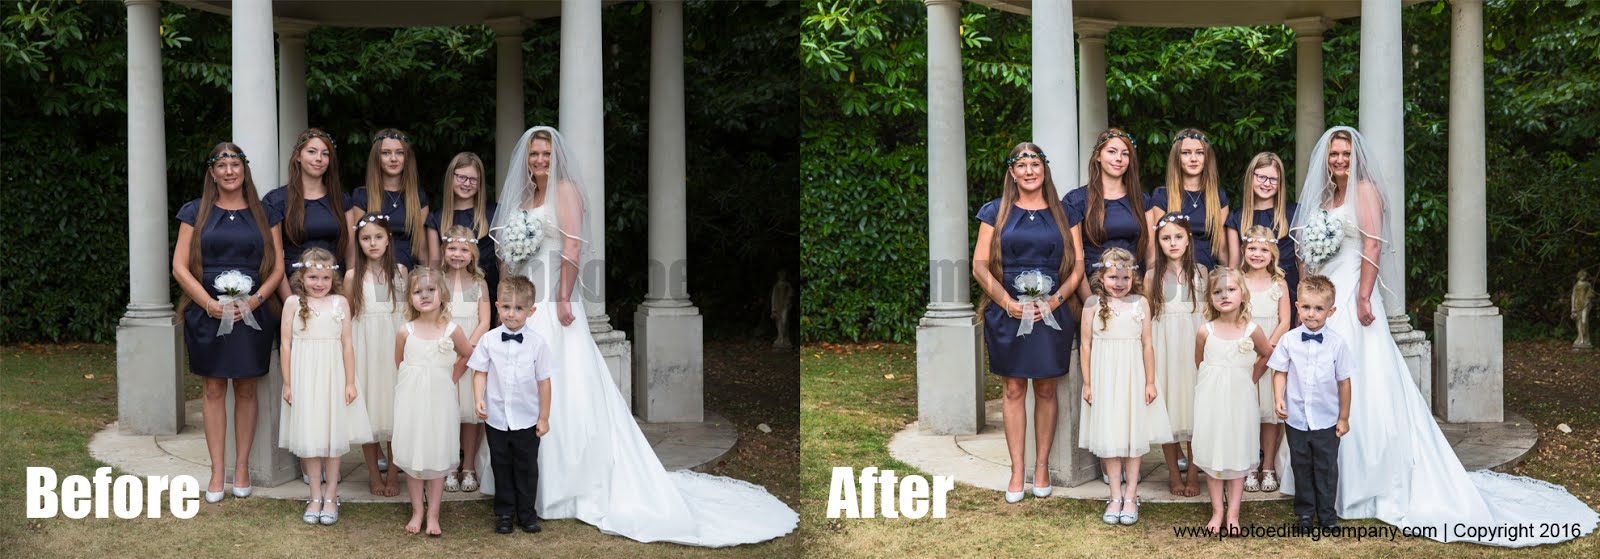 Wedding Photo Editing Company